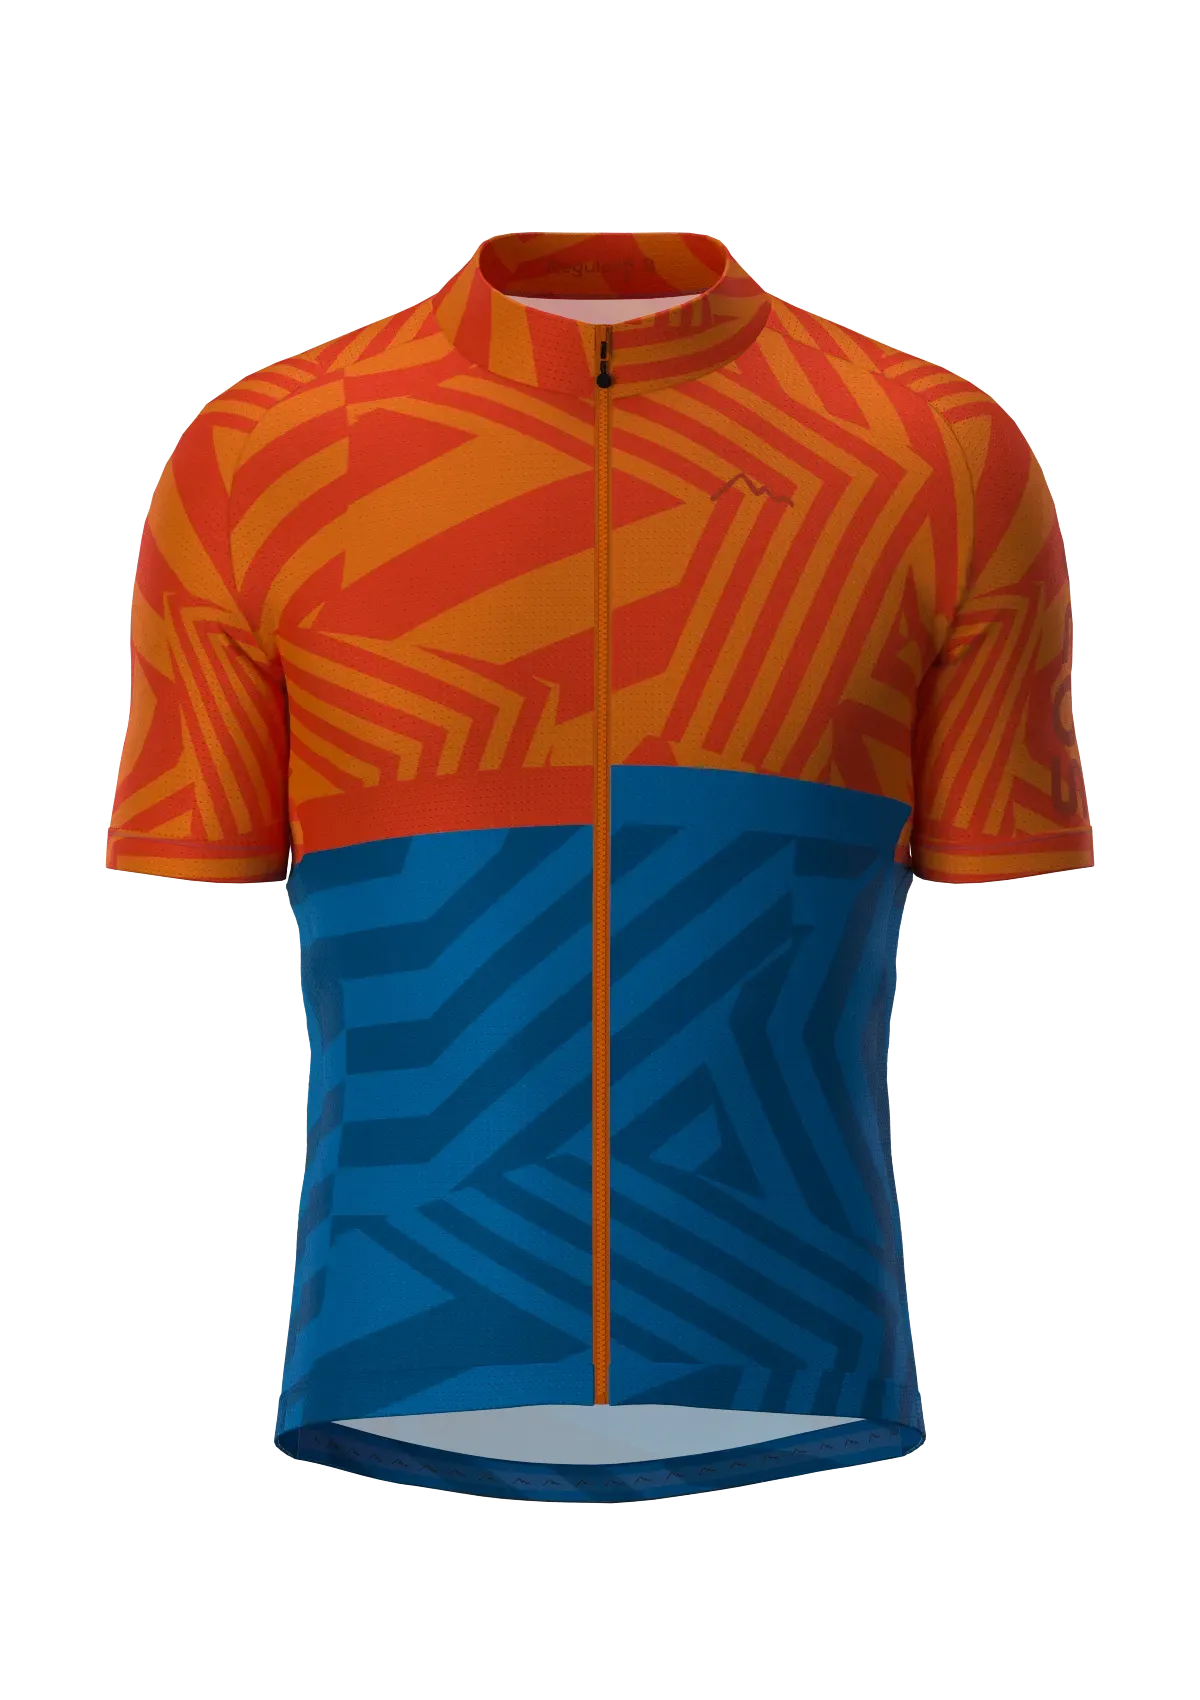 Maillot cycliste régulier orange-bleu